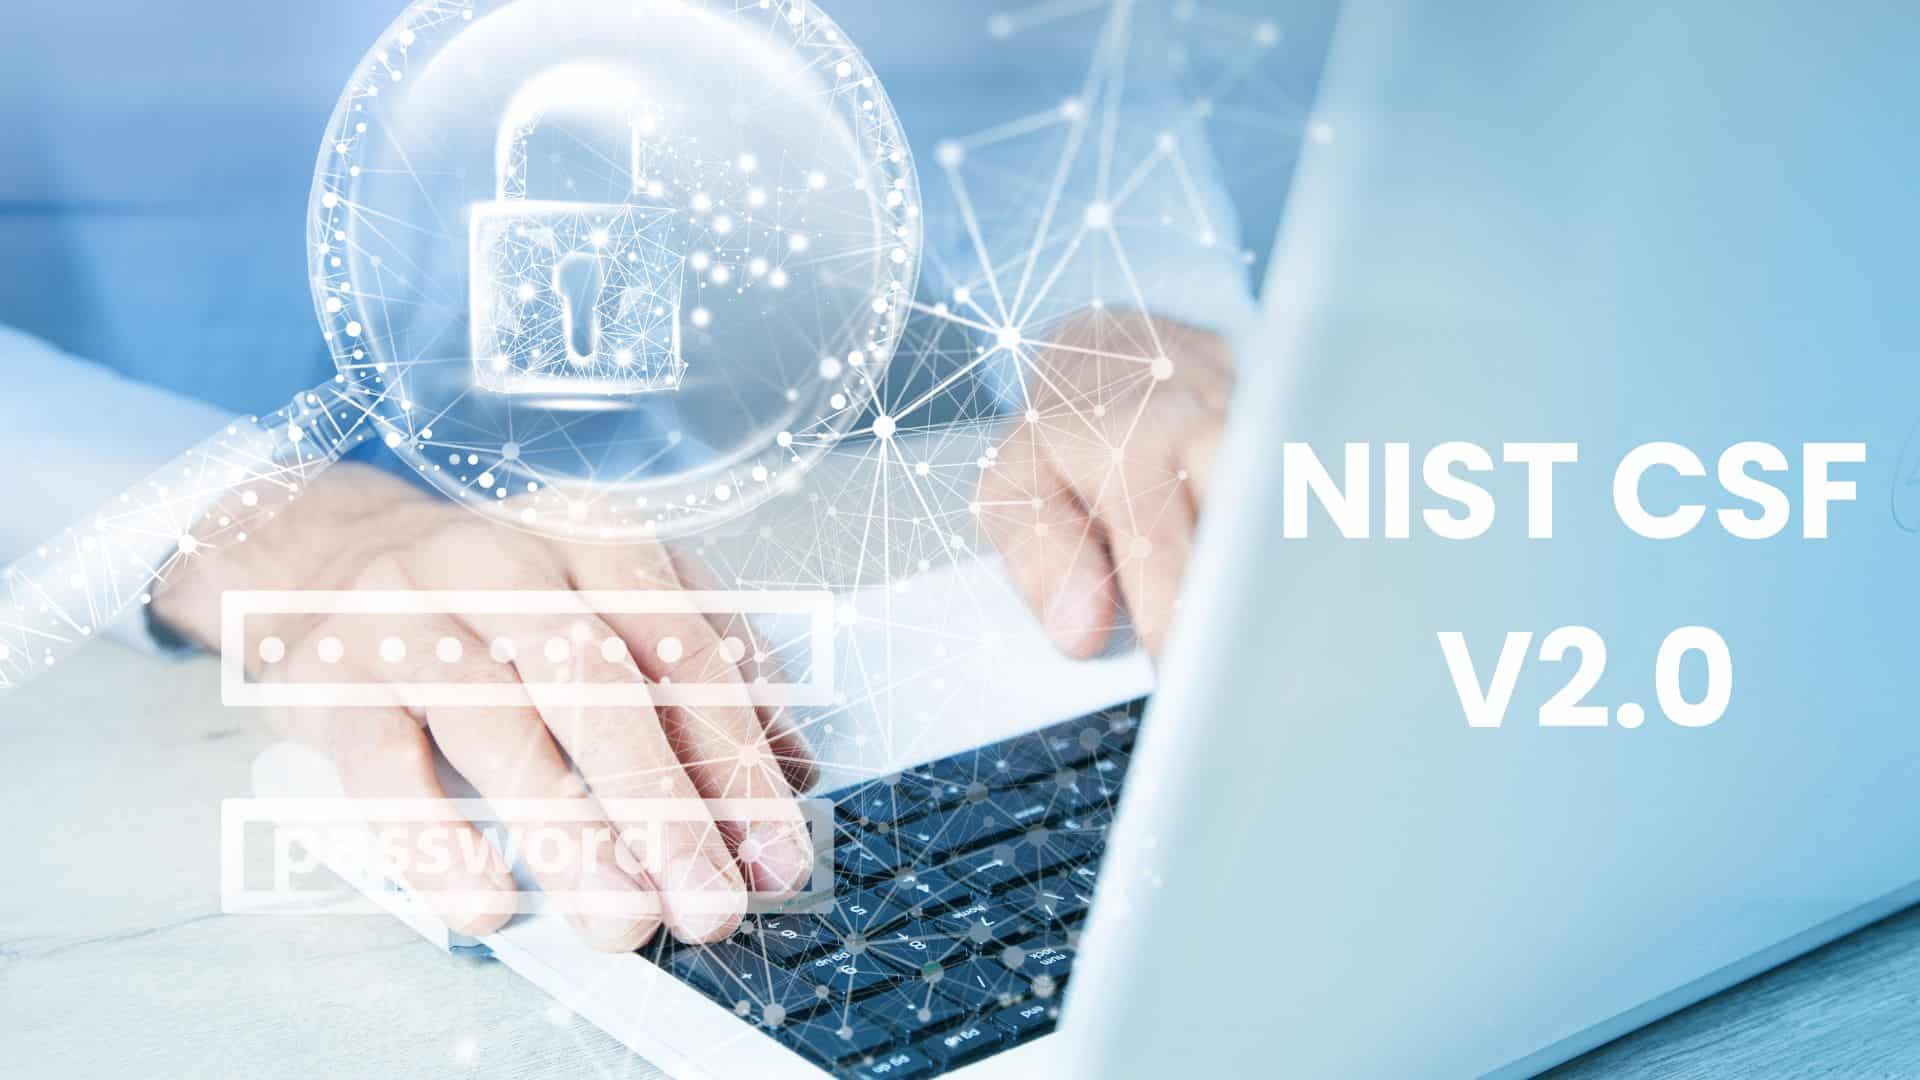 NIST Governance Featured Image For NIST CSF V2.0